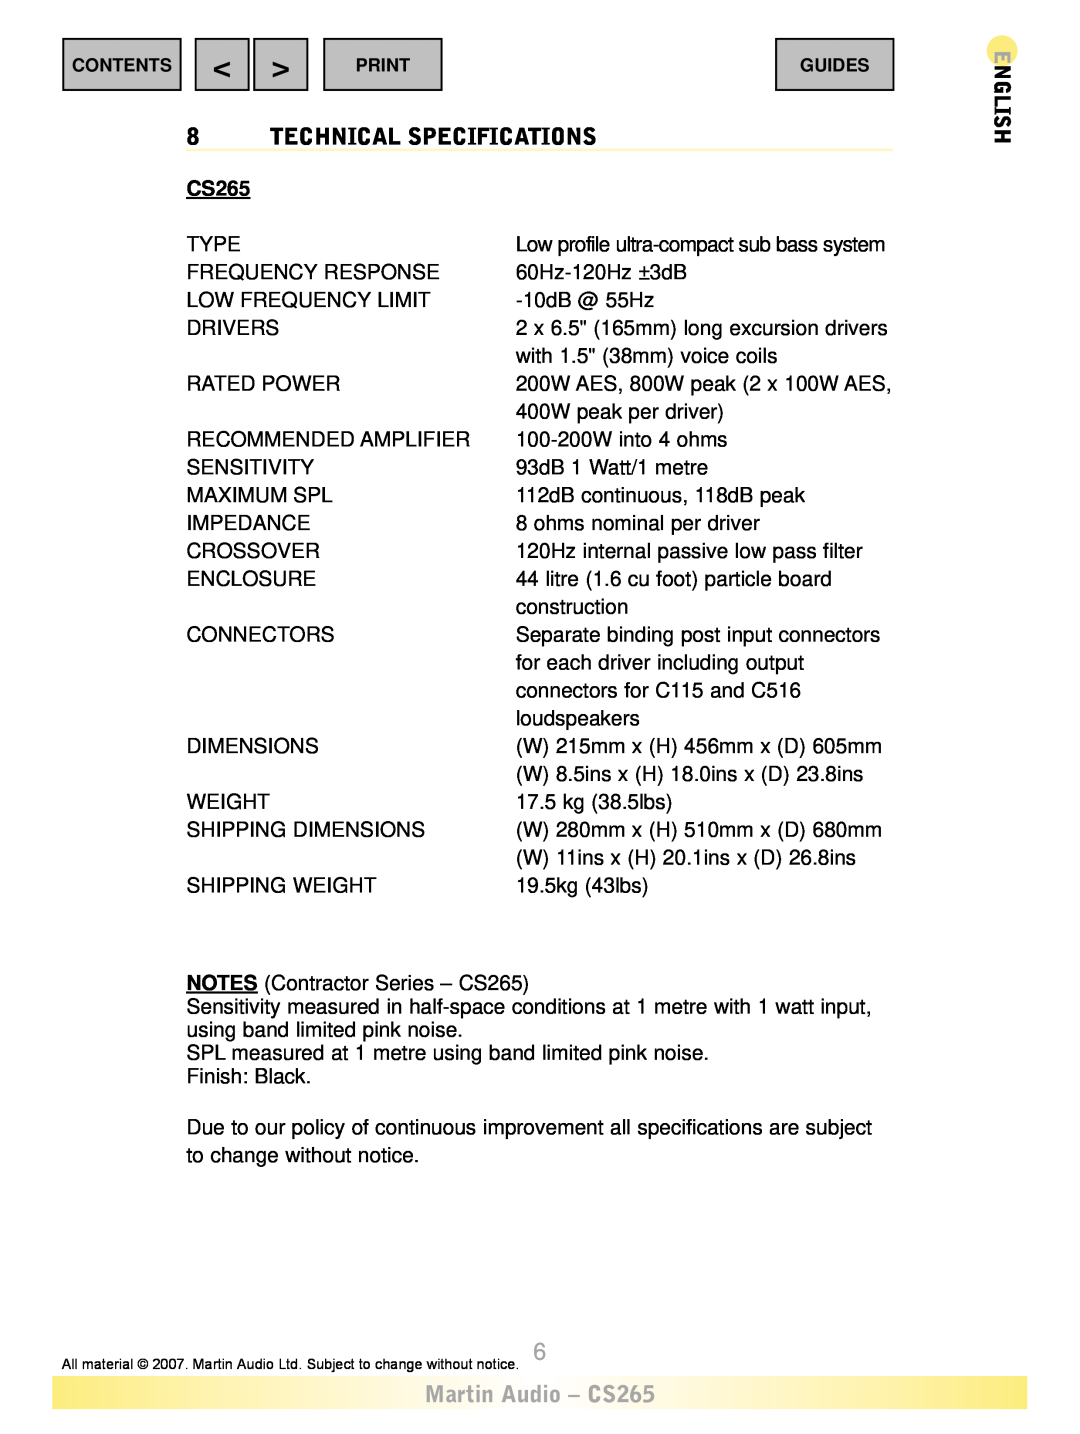 Martin Audio warranty Technical Specifications, Martin Audio - CS265, English 